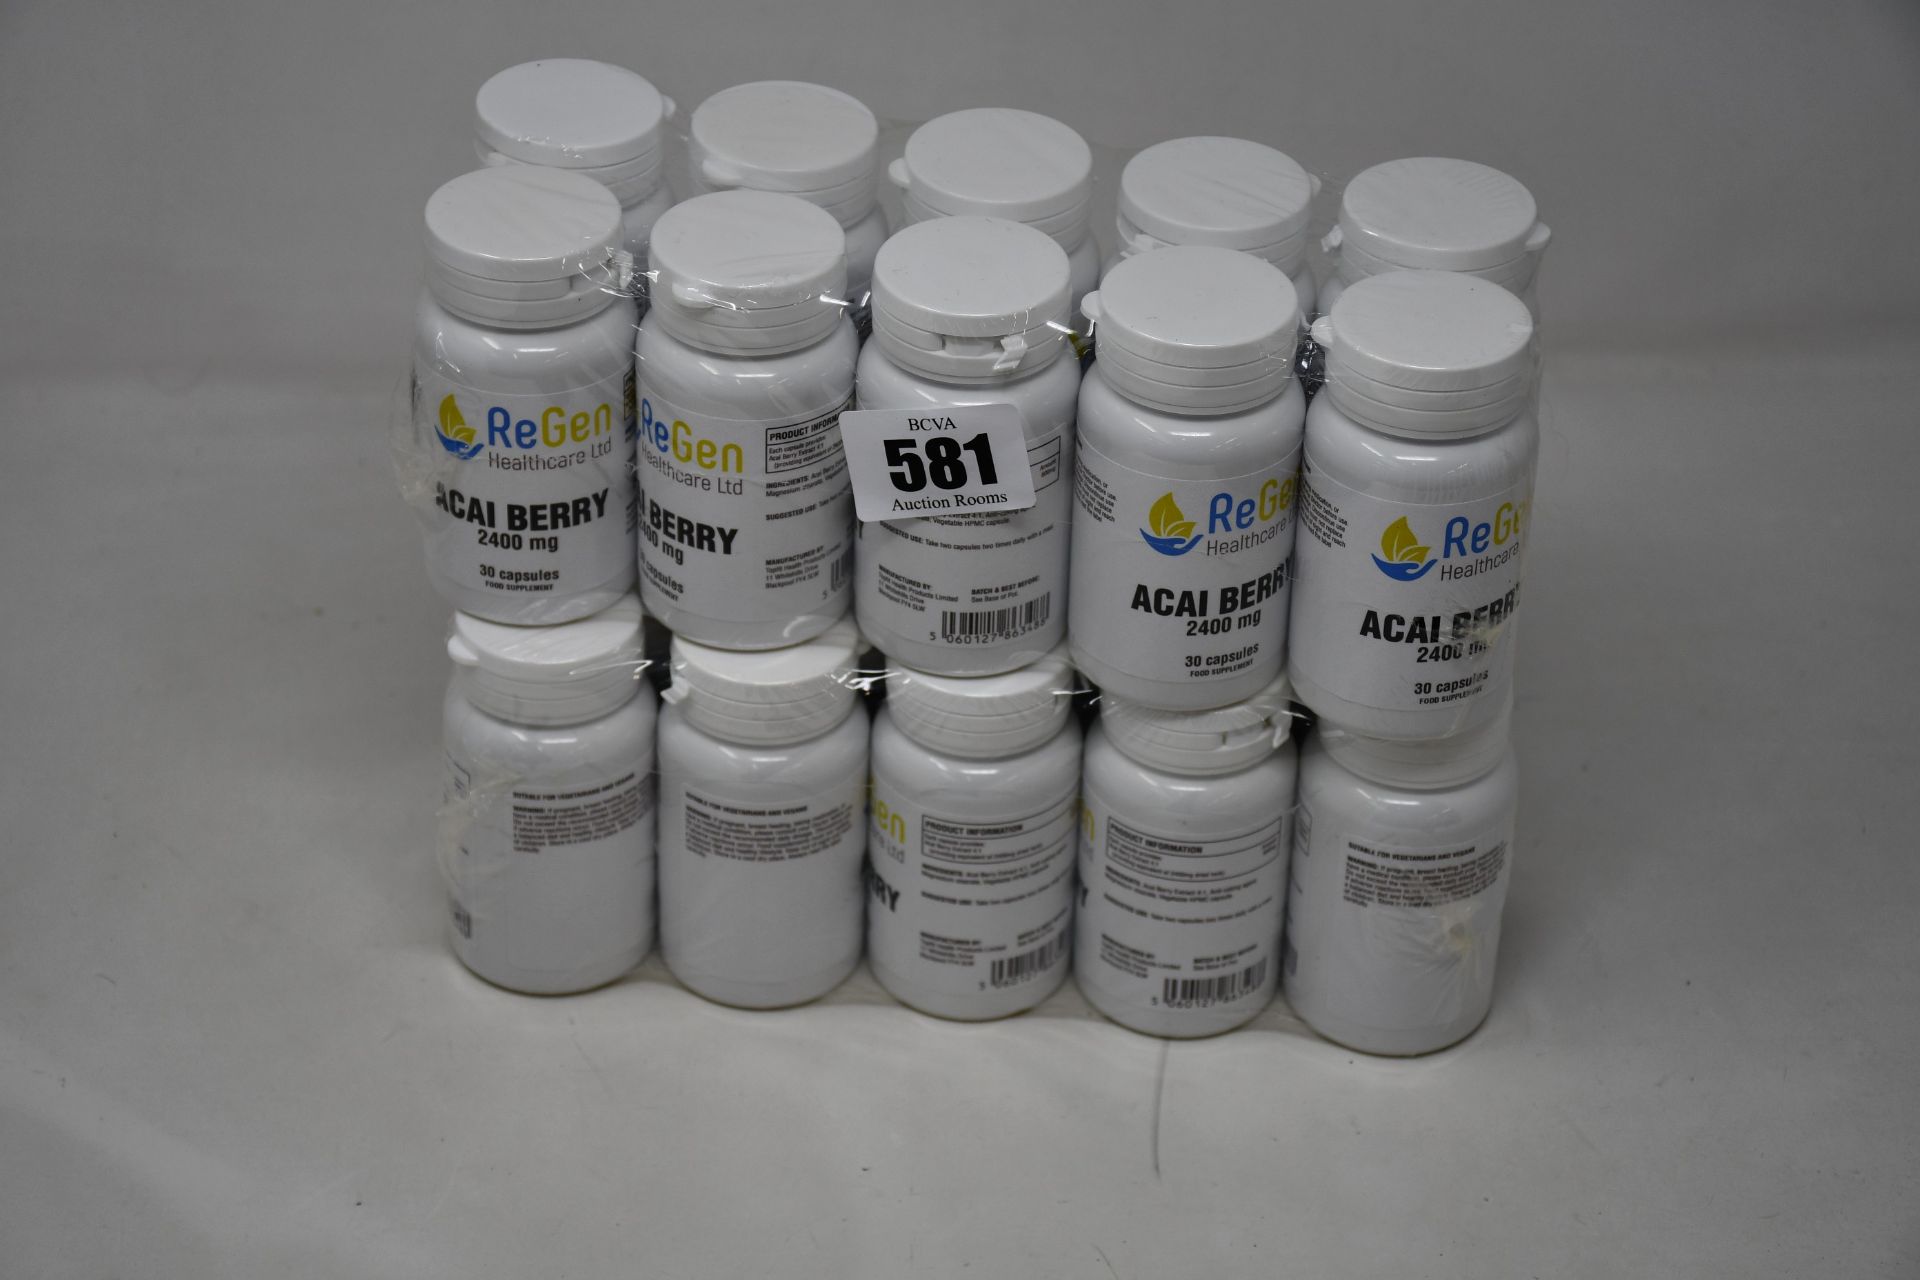 Twenty ReGen Healthcare Acai Berry 2400mg food supplements (30 capsules each, Exp: 03/2023).